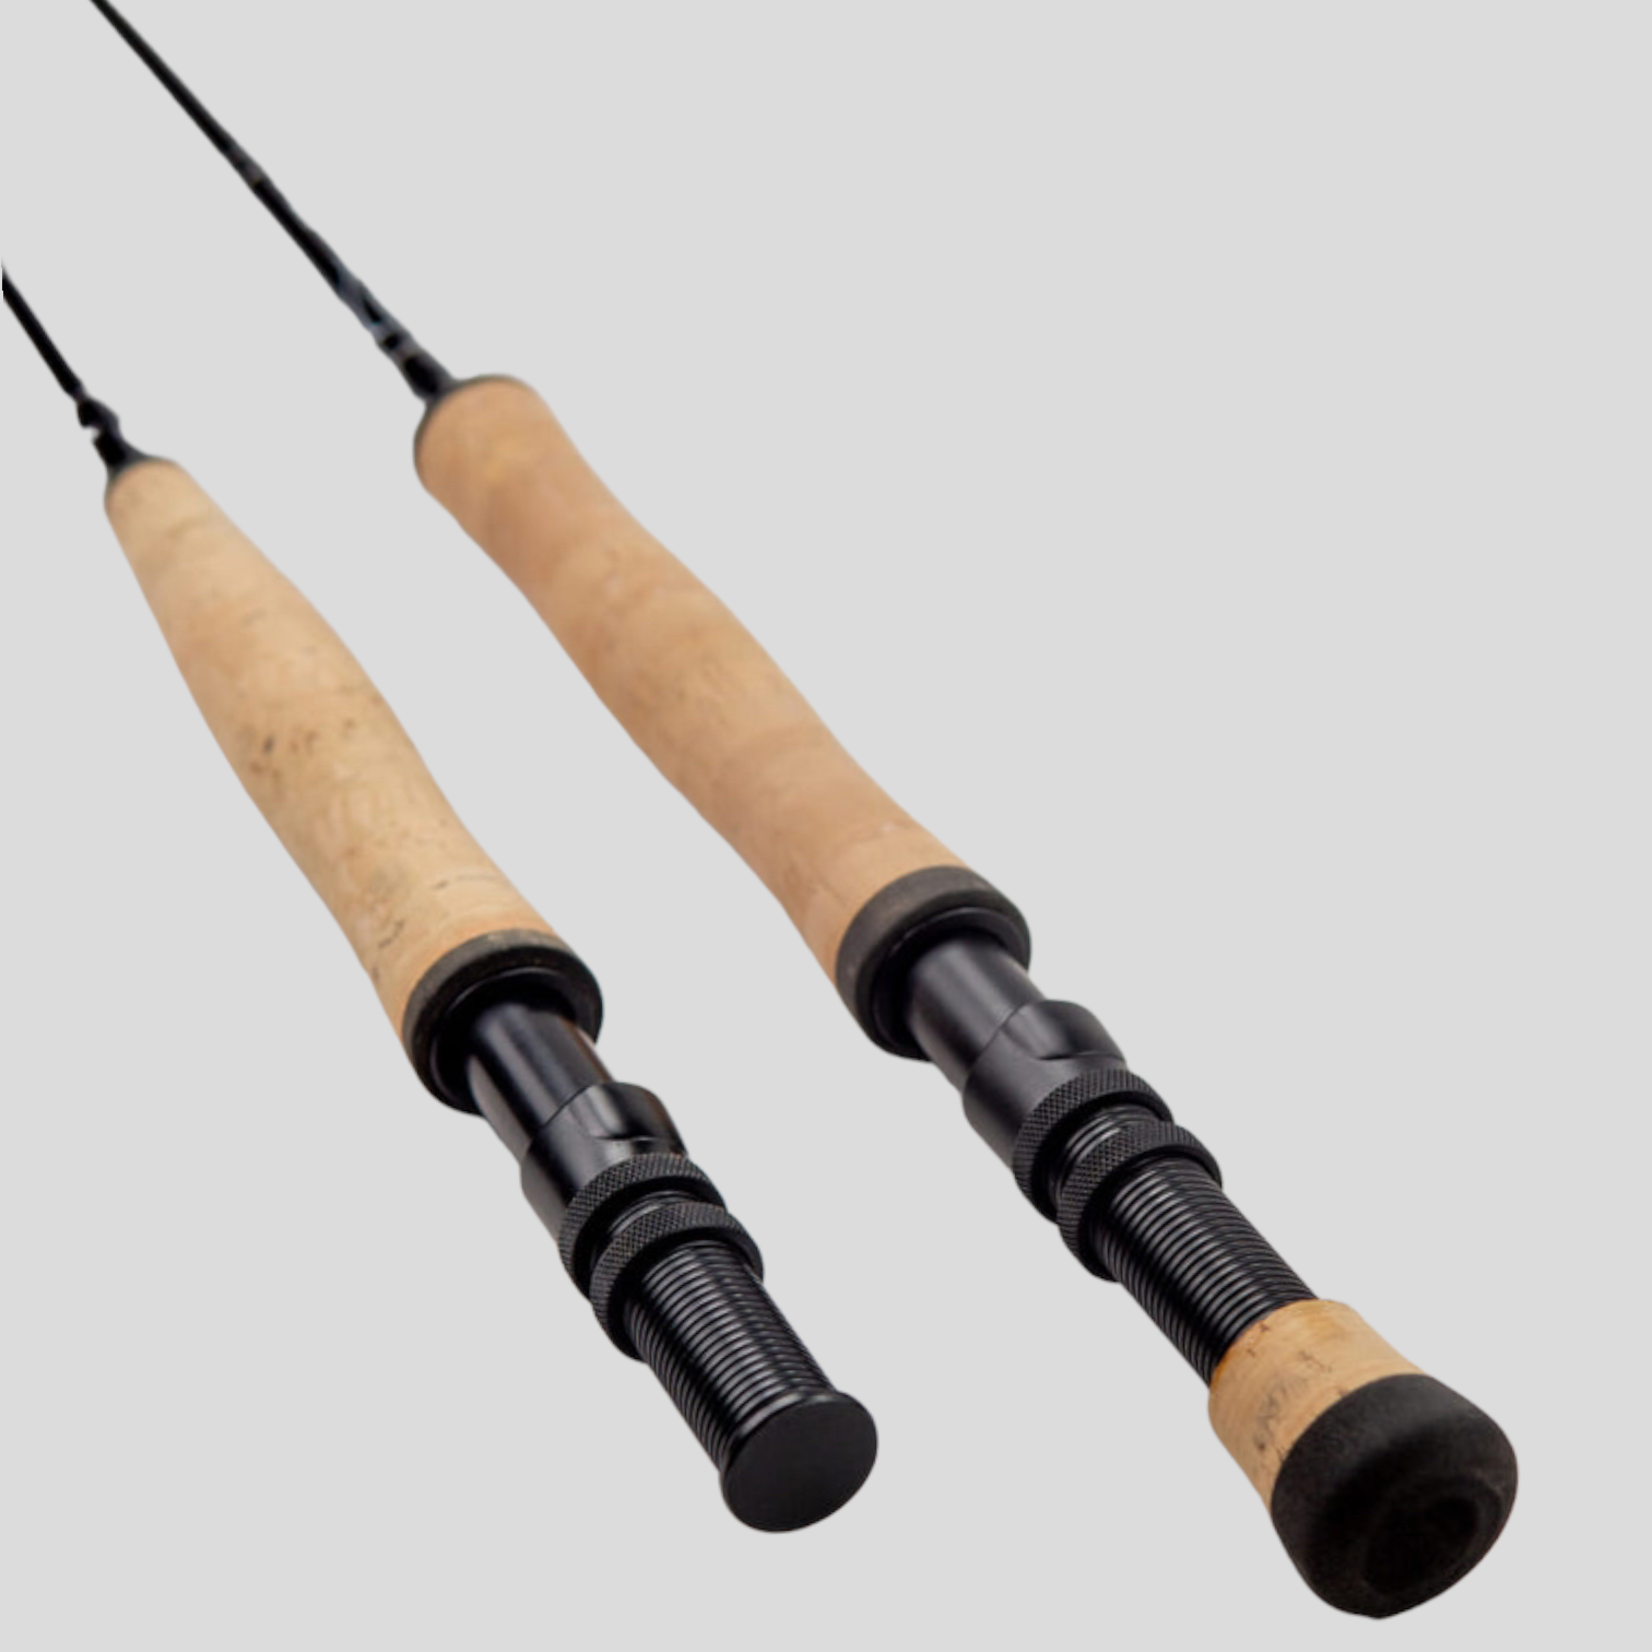  Fishing Equipment - Cortland / Fishing Equipment